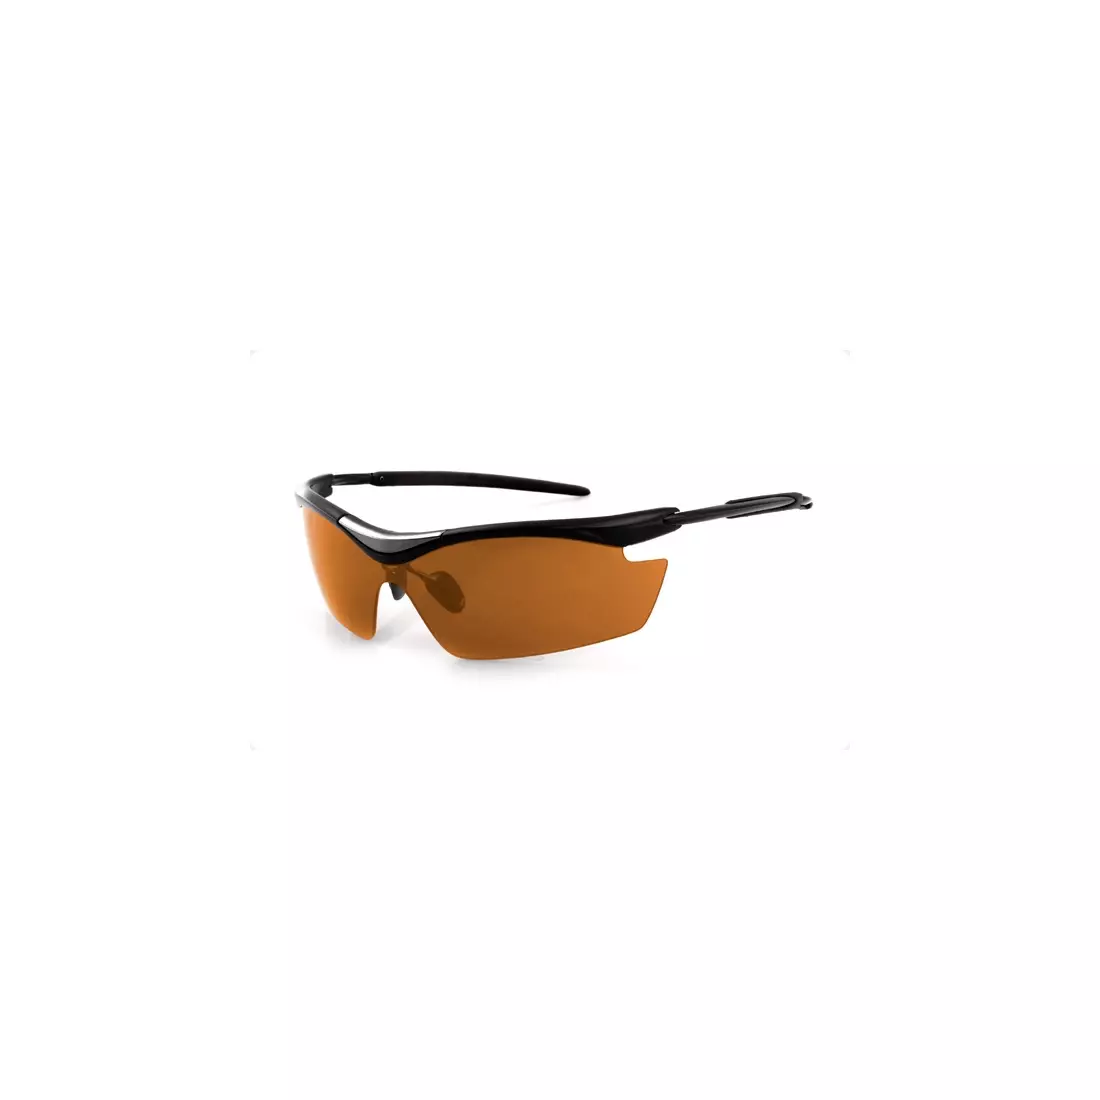 FISCHER - sports glasses FS-04 - color: Black